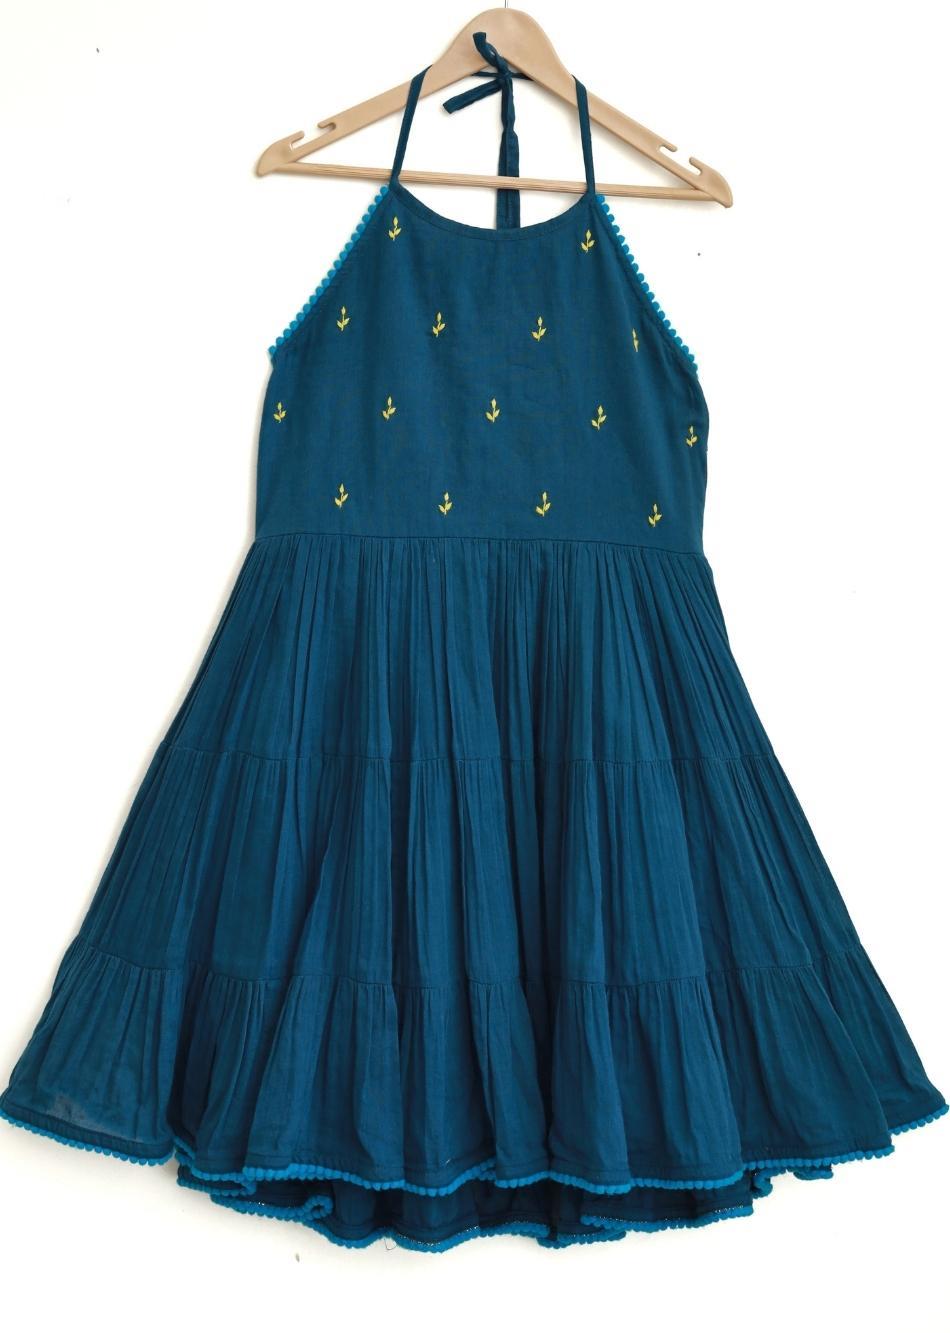 Jiyara Teal Blue Halter Dress By Jovi Fashion